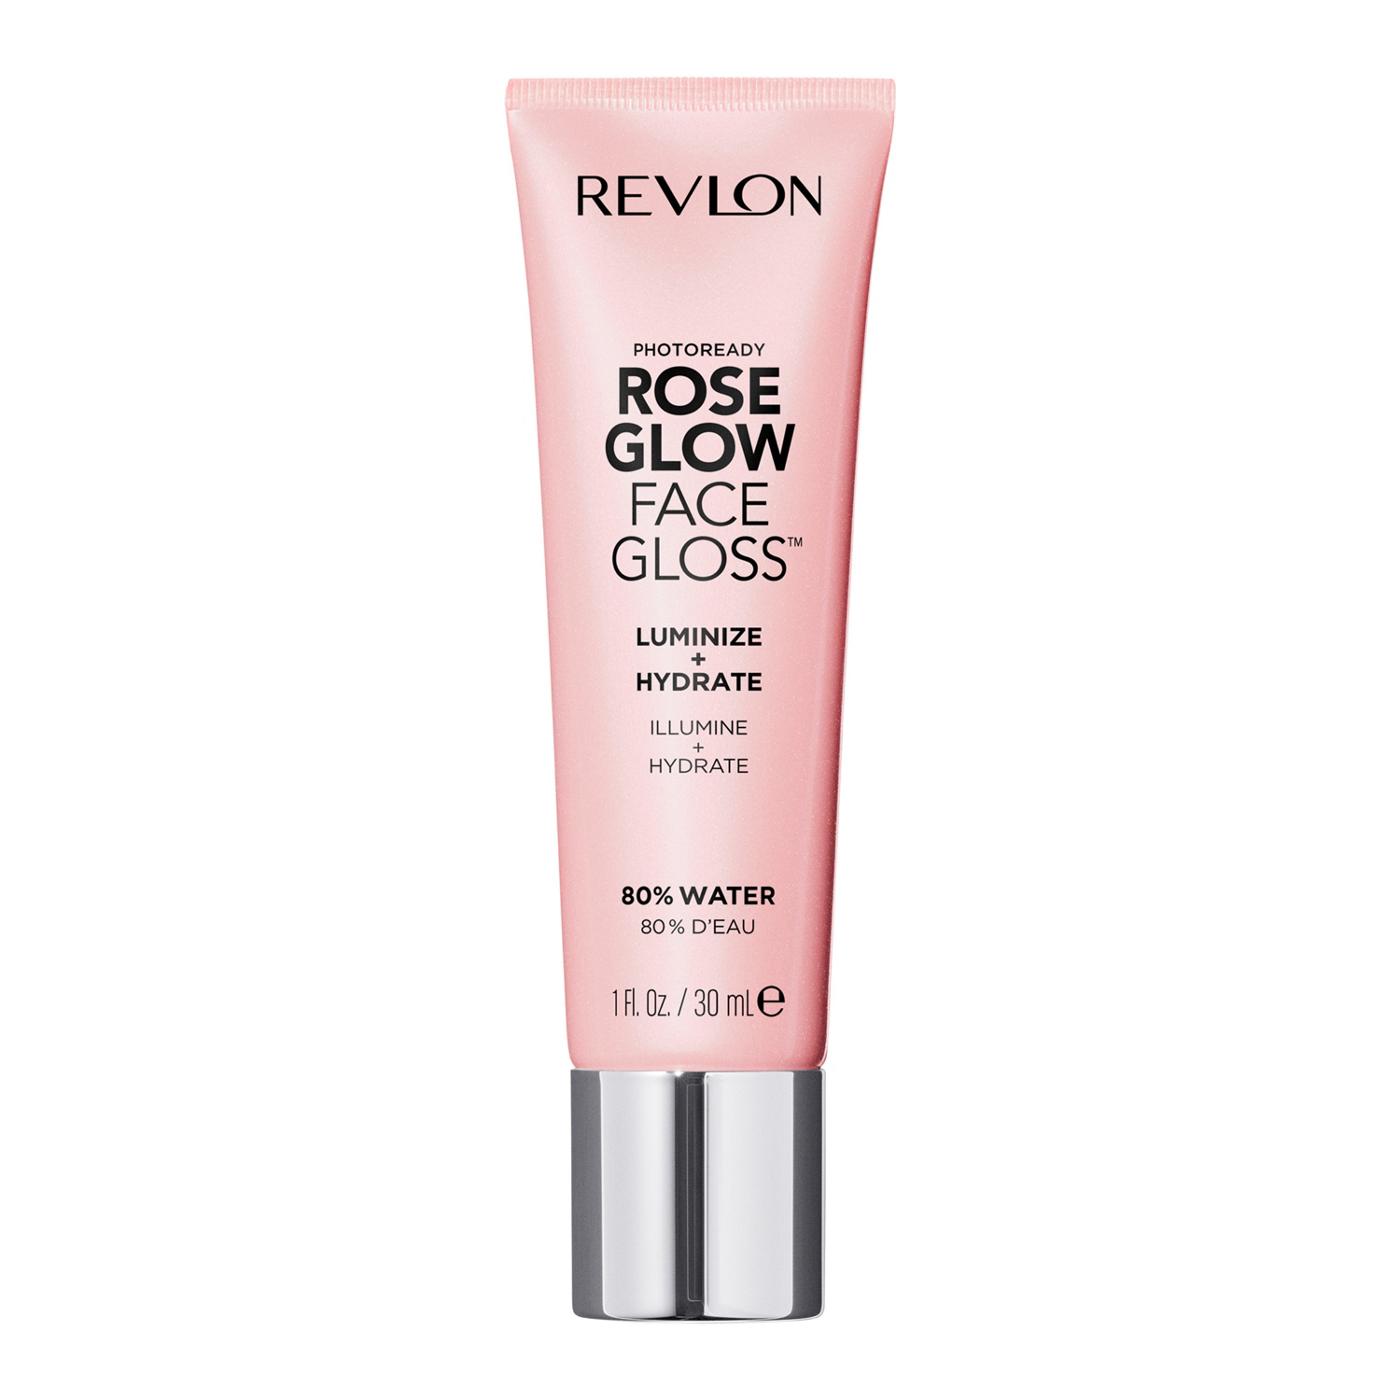 Revlon PhotoReady Rose Glow Face Gloss; image 1 of 4